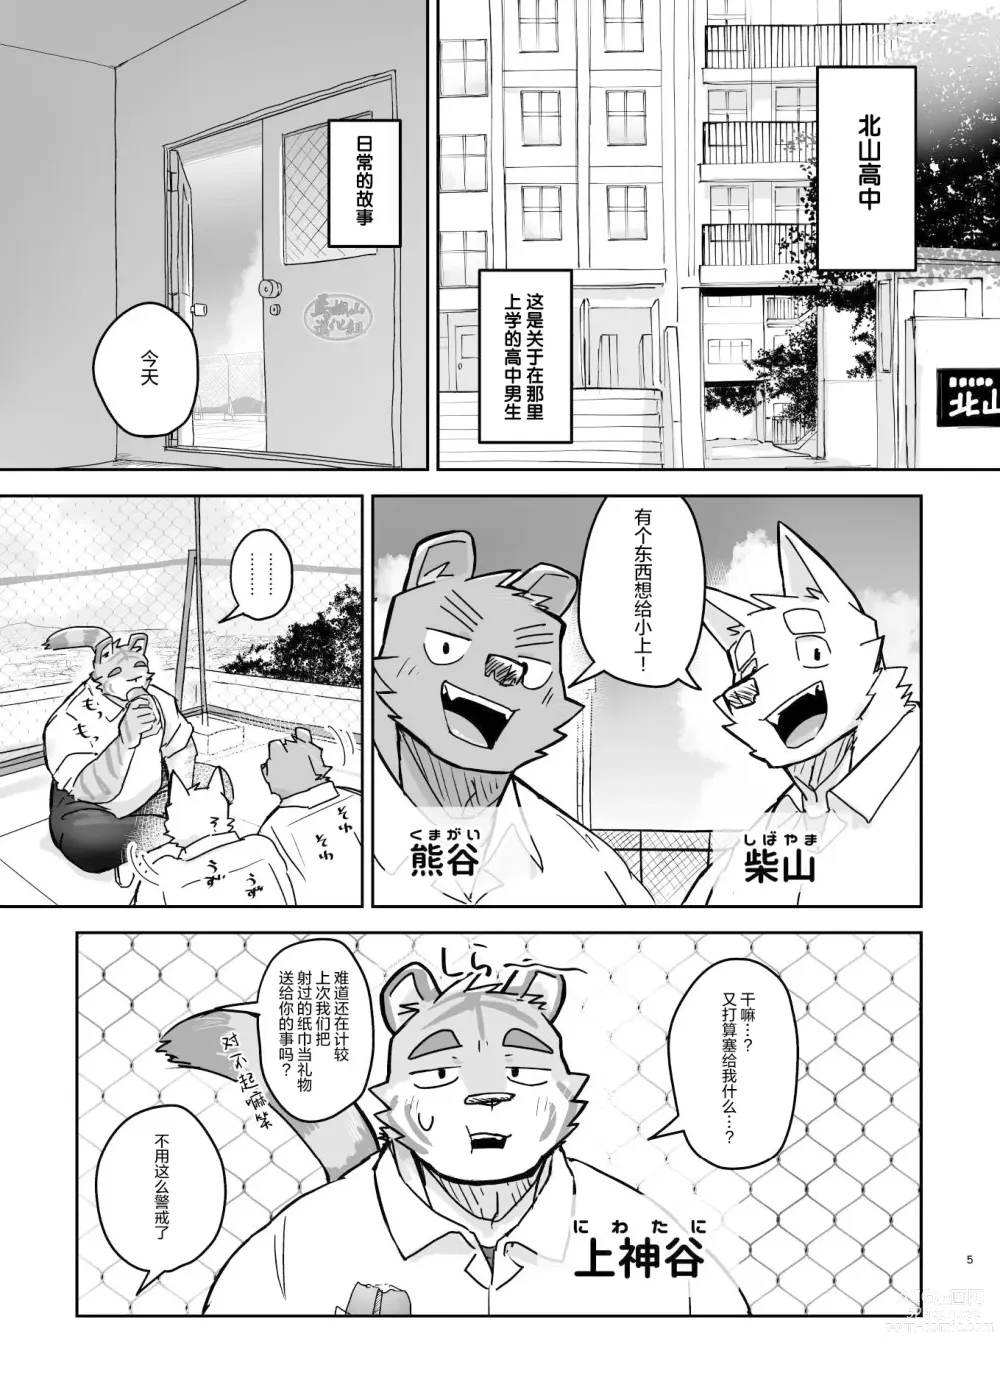 Page 5 of doujinshi 关于我在教室被榨精这件事